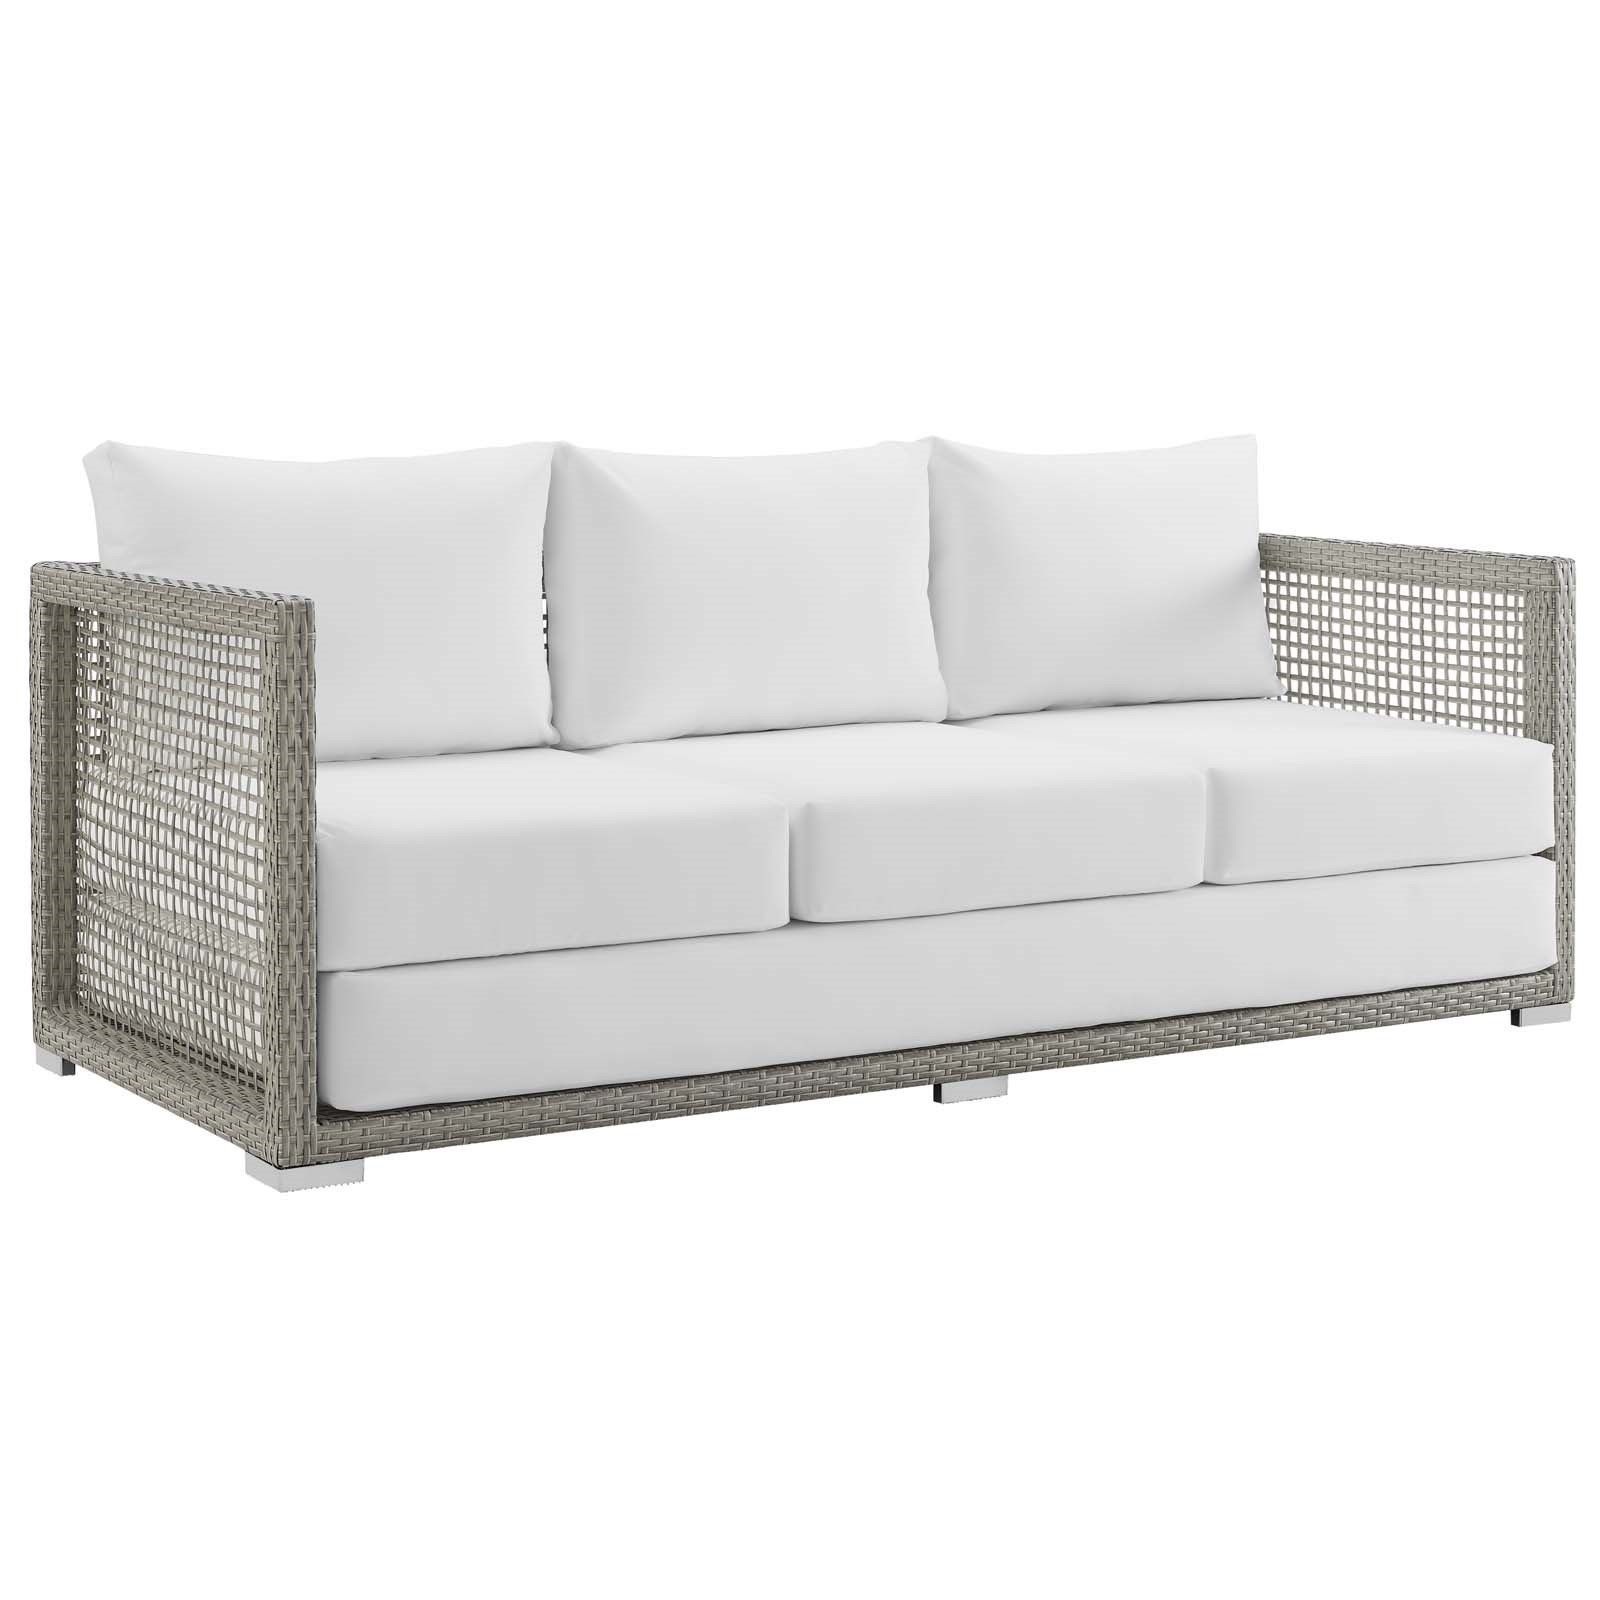 Aura Outdoor Patio Wicker Rattan Sofa in Gray White Hyme